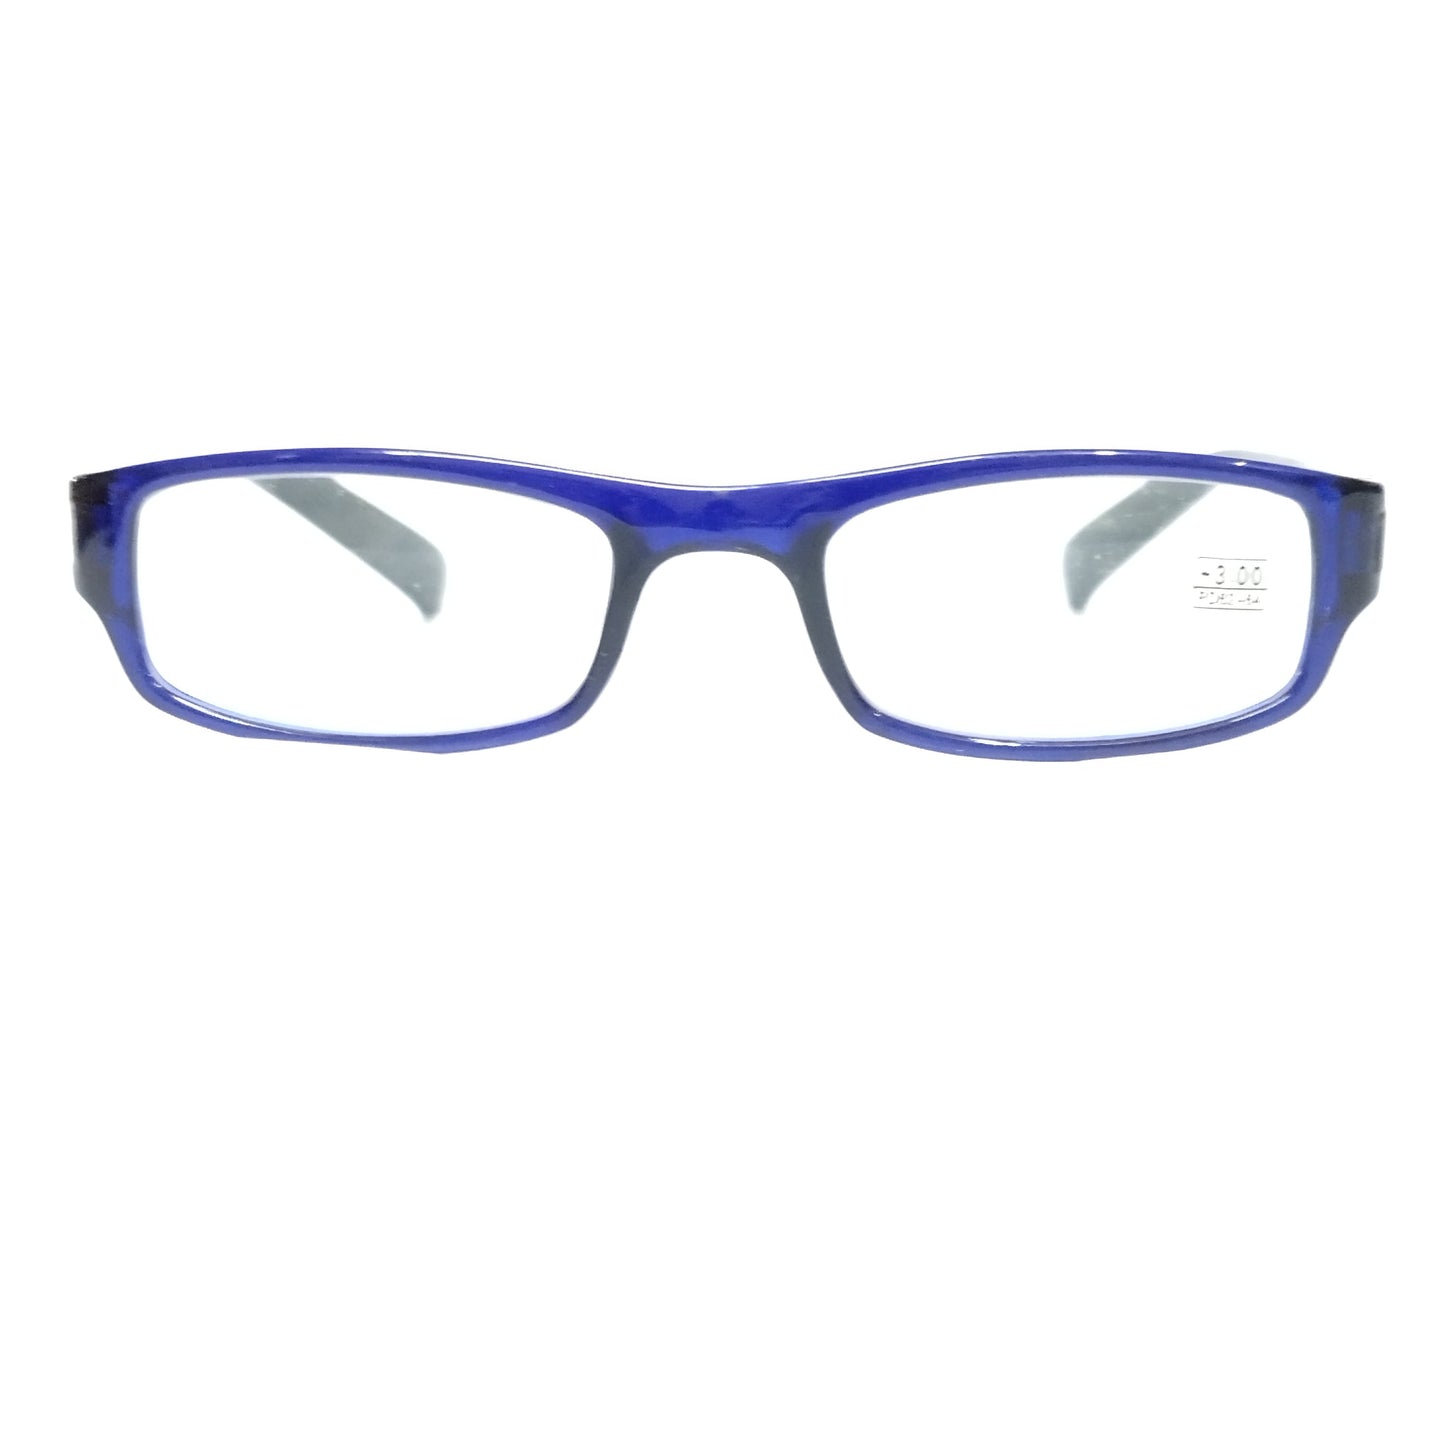 Stylish Computer Reading Glasses with Blue Light Coating